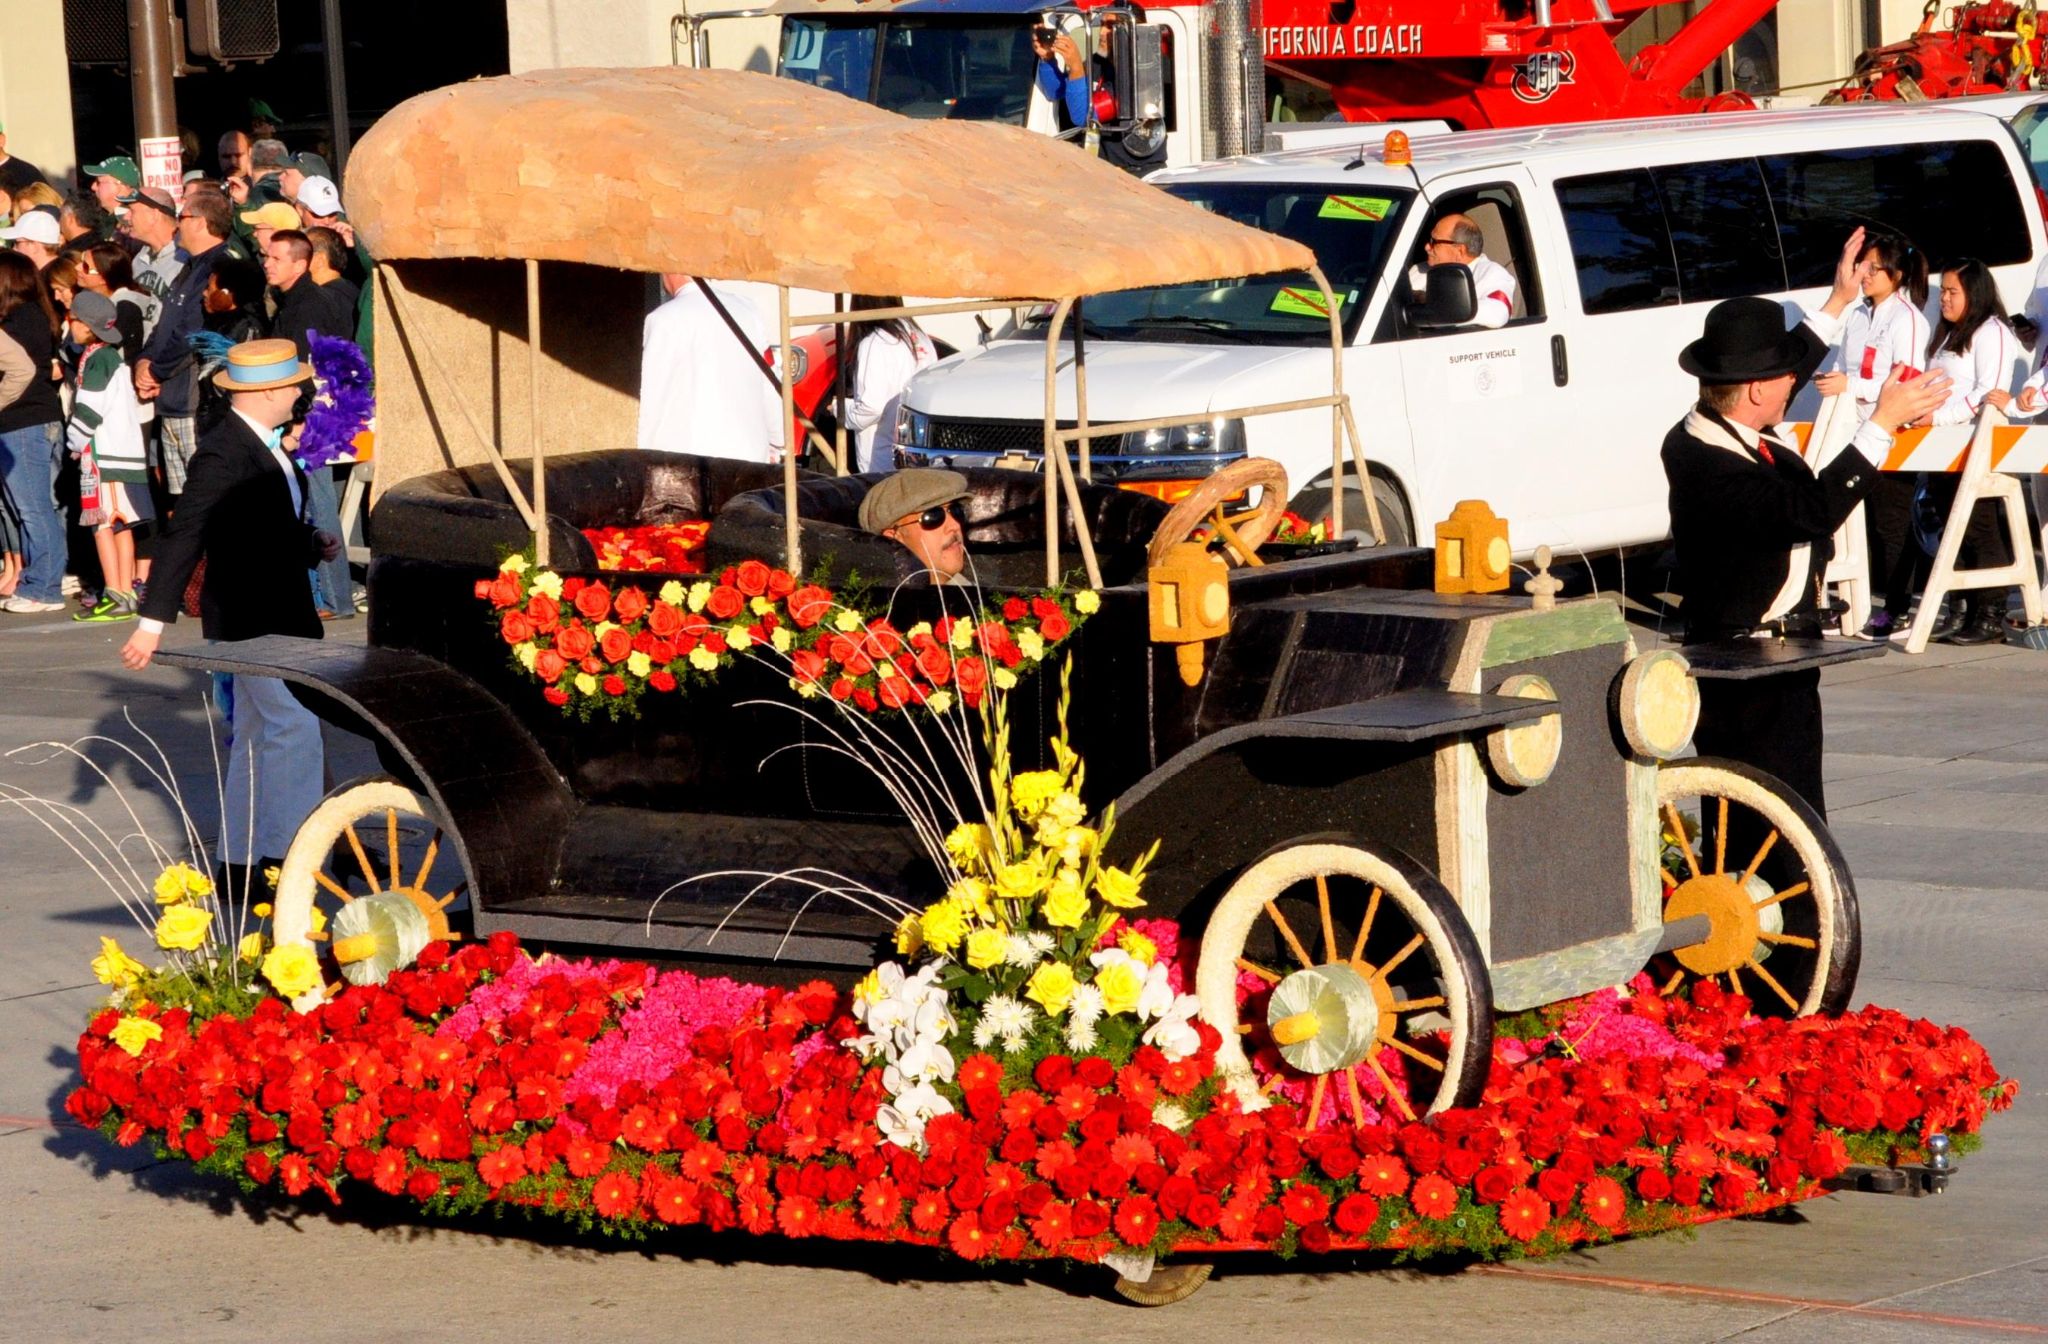 Wells Fargo Opening Show (b), Tournament of Roses Parade, Pasadena, CA - 2014-01-01